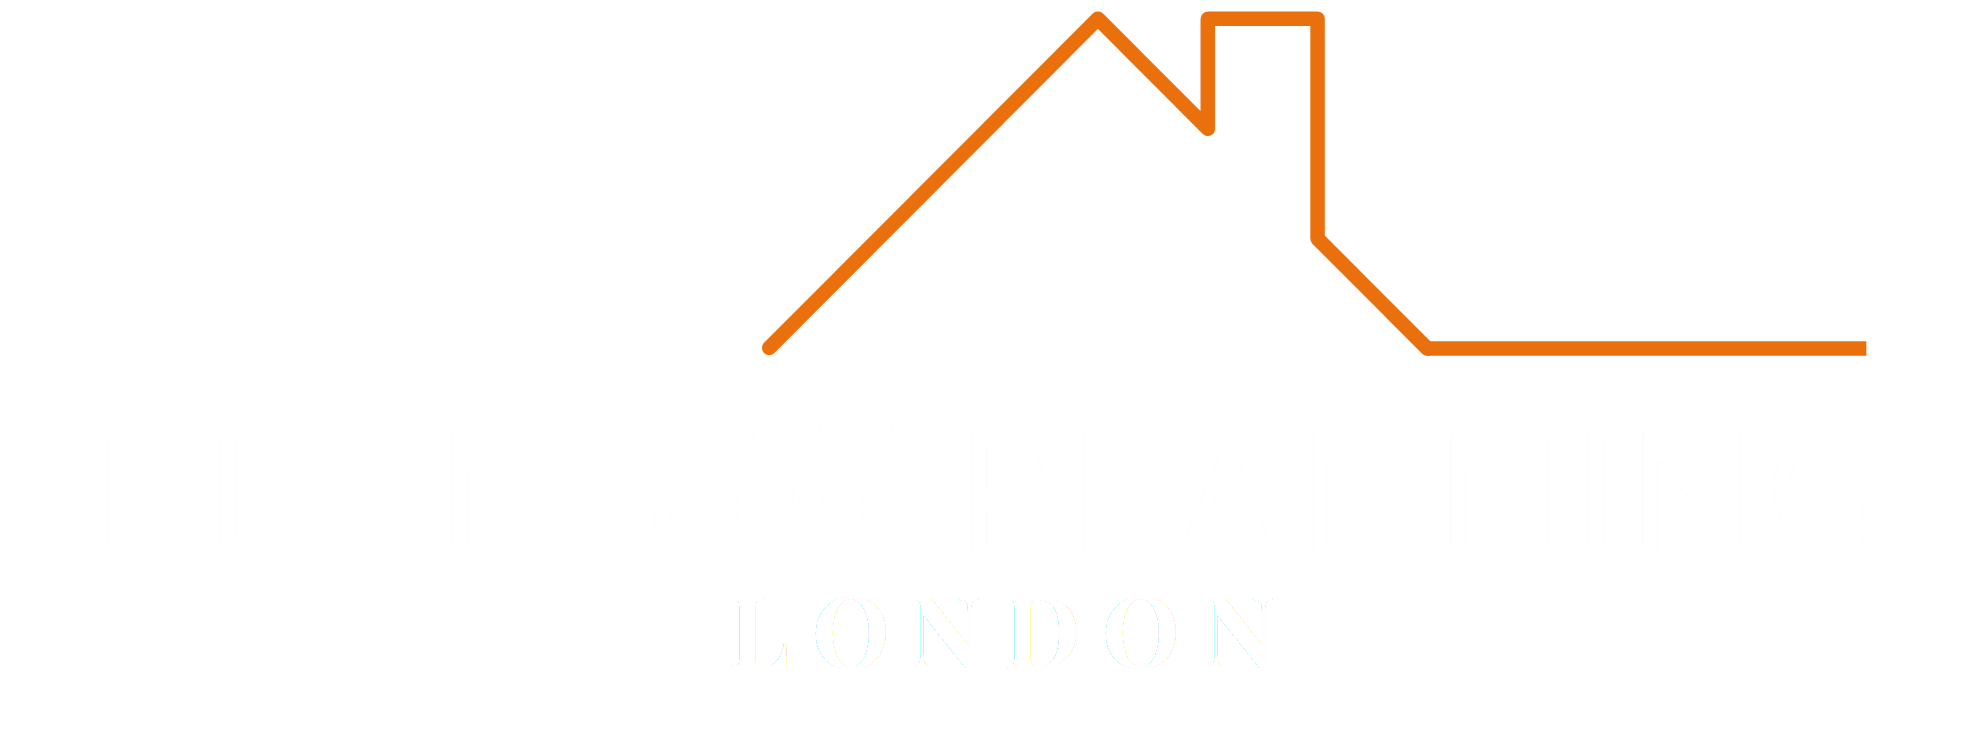 Plans & Planning London